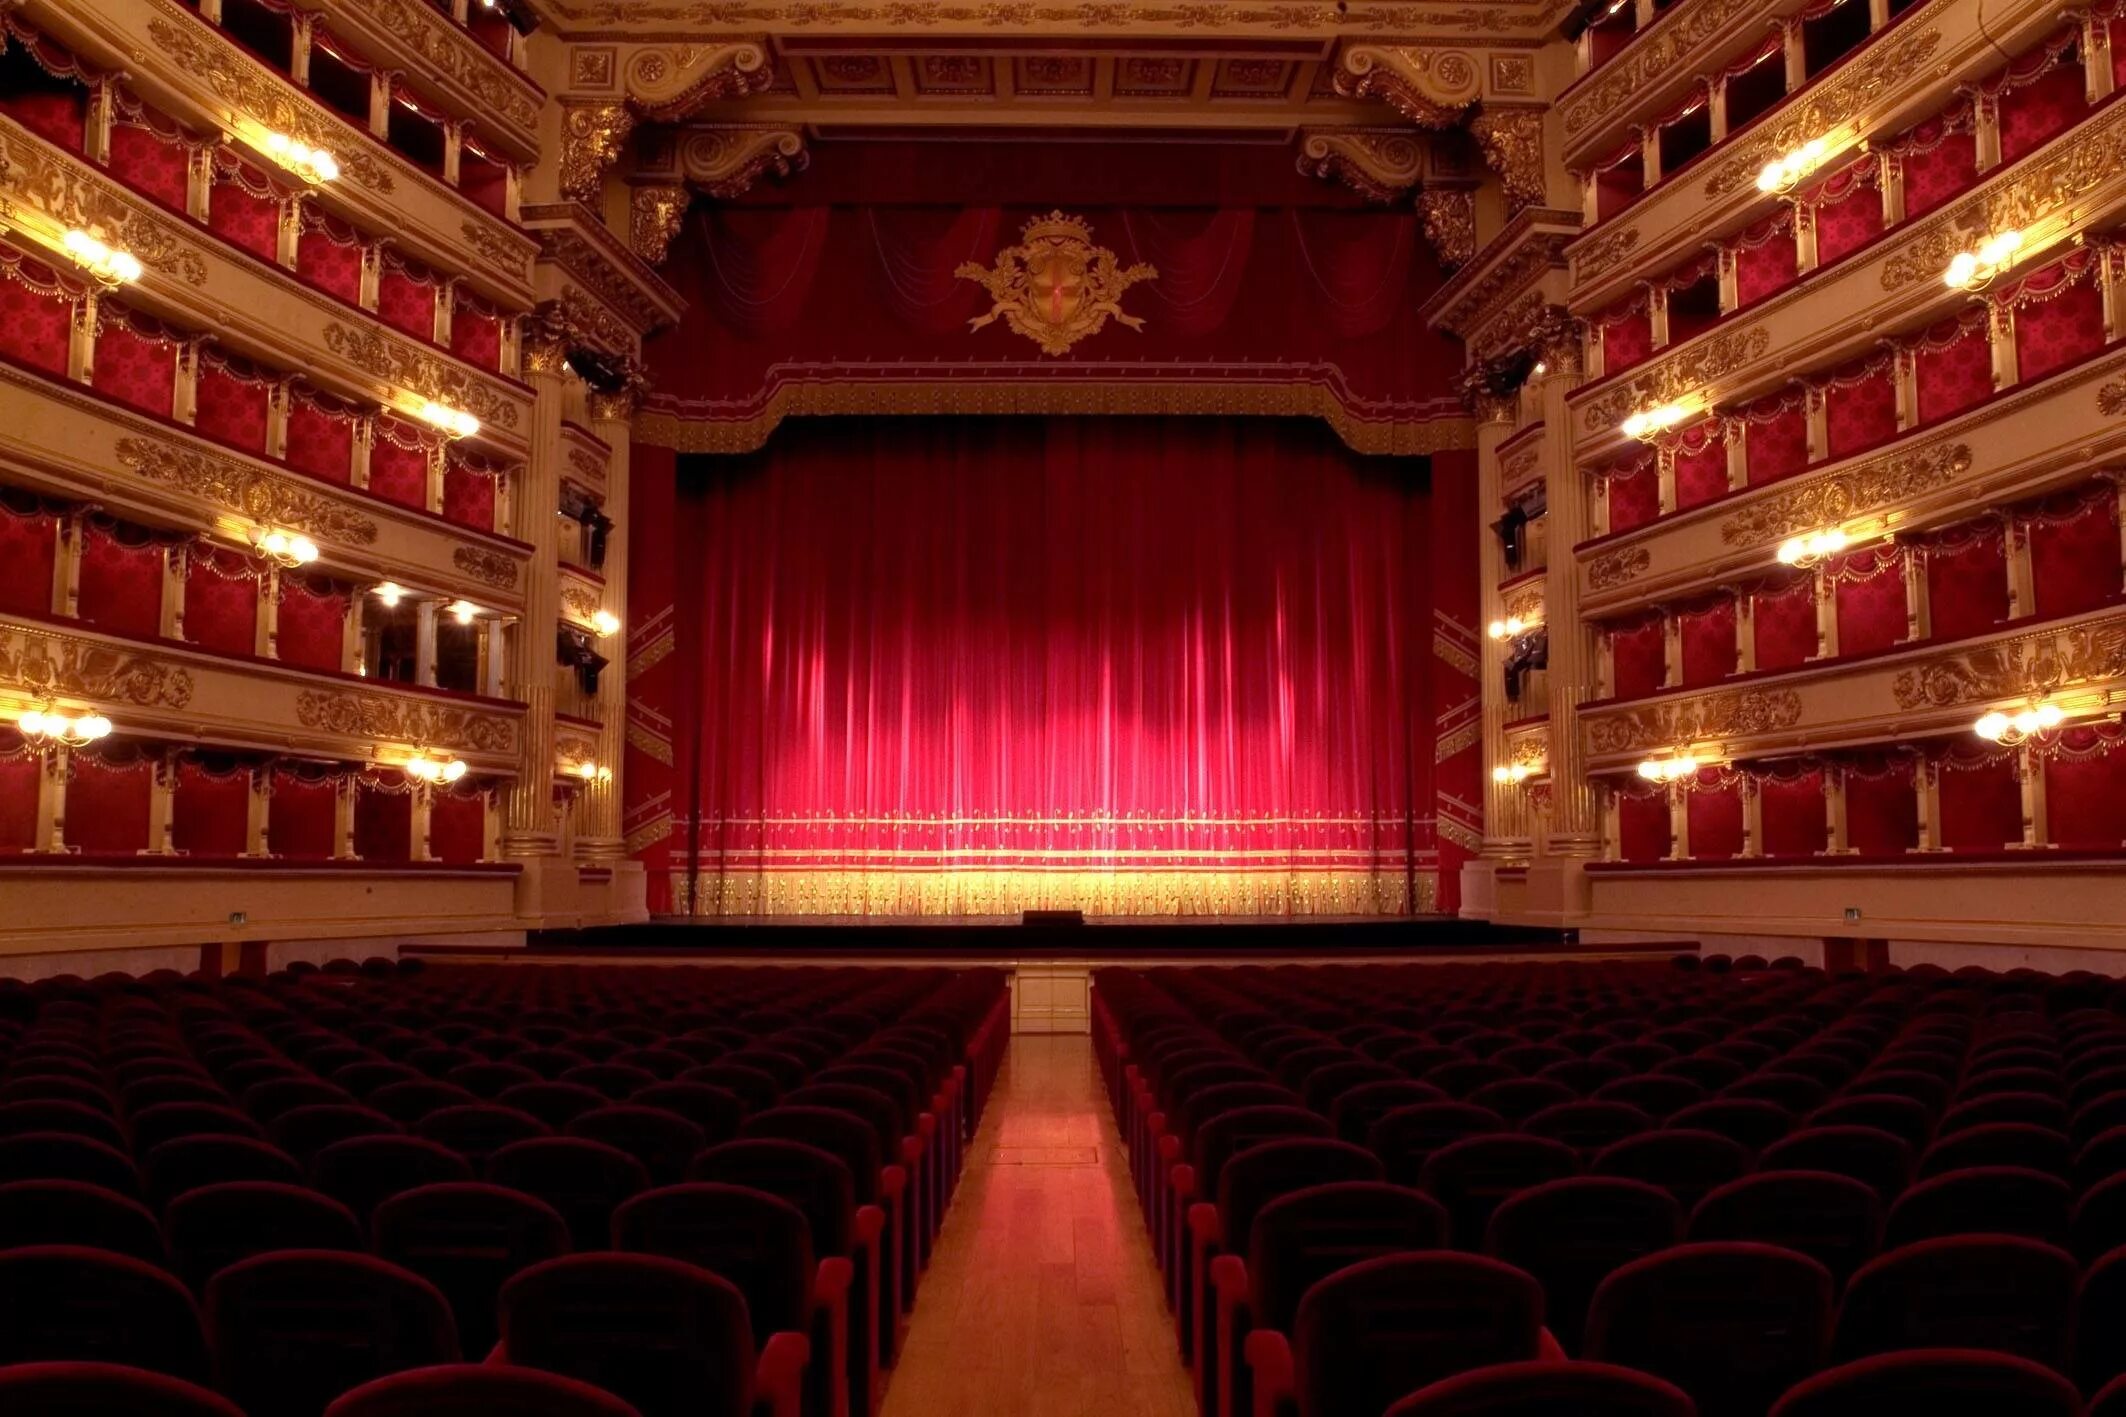 Teatr. Ла скала оперный театр. Театр ла скала в Милане занавес. Театр ла скала опера сцена. Занавес театра ла скала.